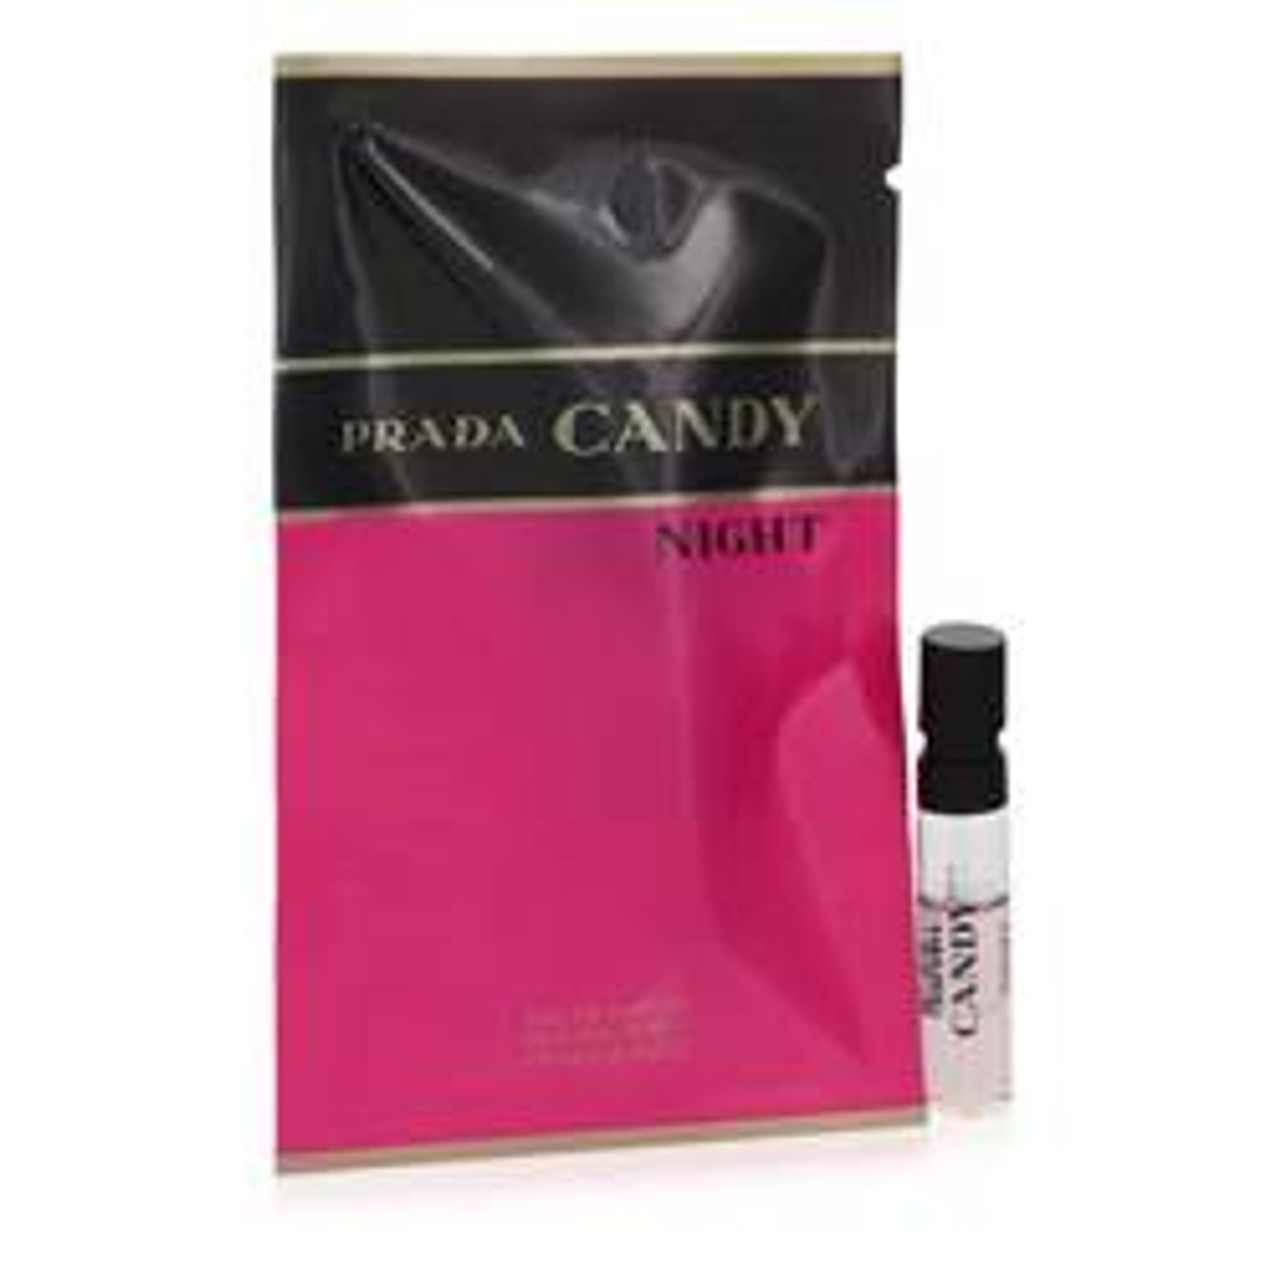 Prada Candy Night Perfume By Prada Vial (sample) 0.05 oz for Women - *Pre-Order